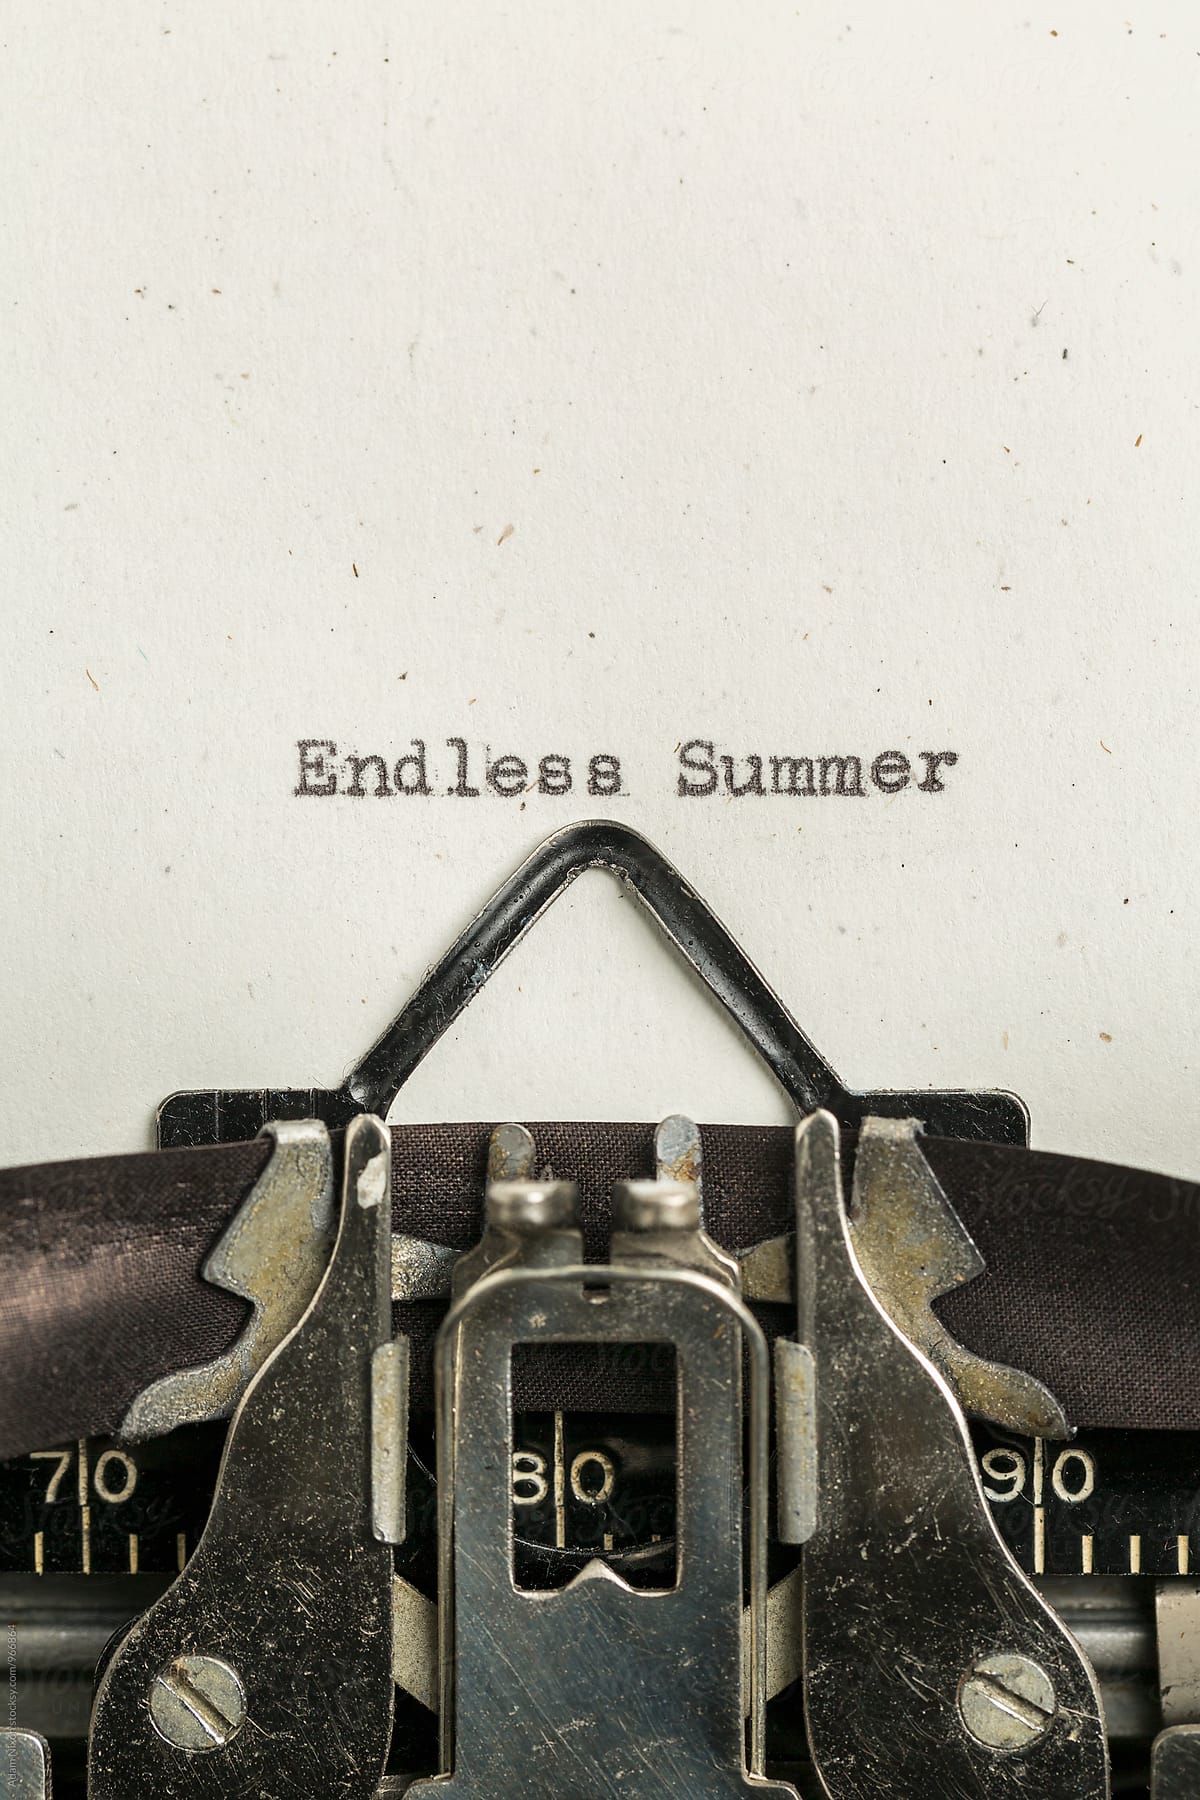 Endless Summer typed on a vintage typewriter